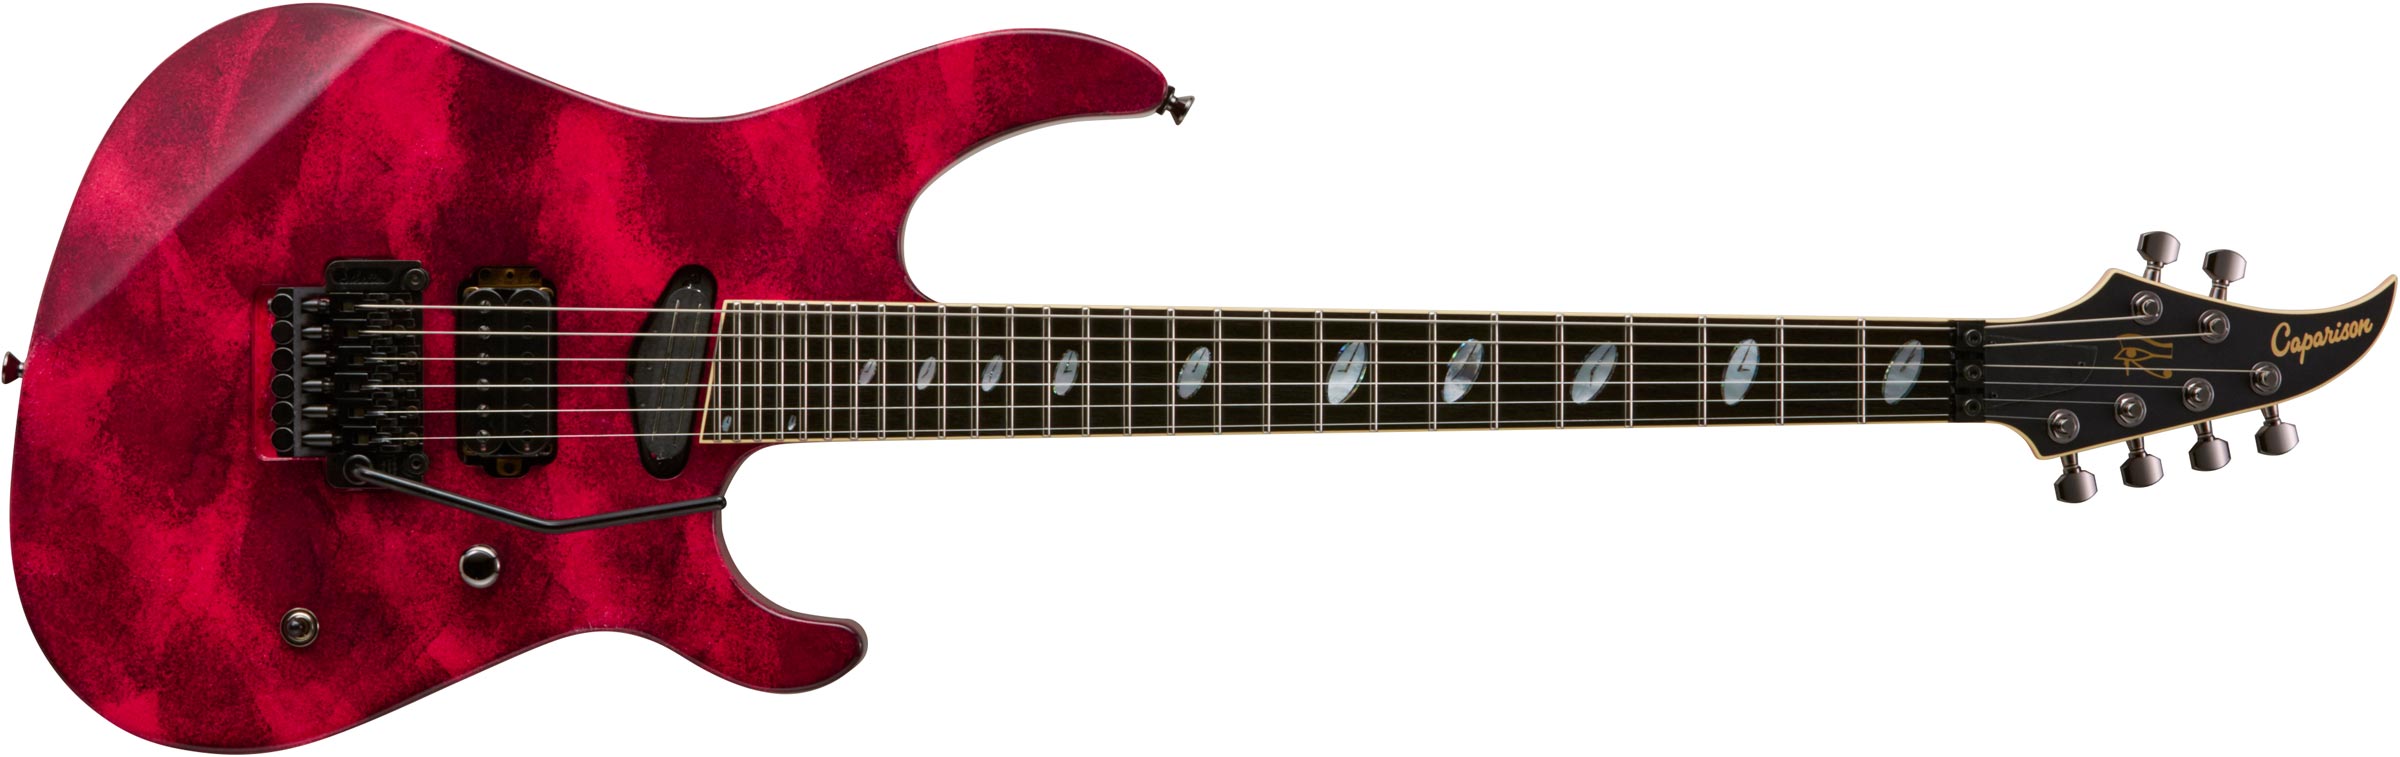 Caparison Guitars Horus-M3 EF - Ebony Fretboard